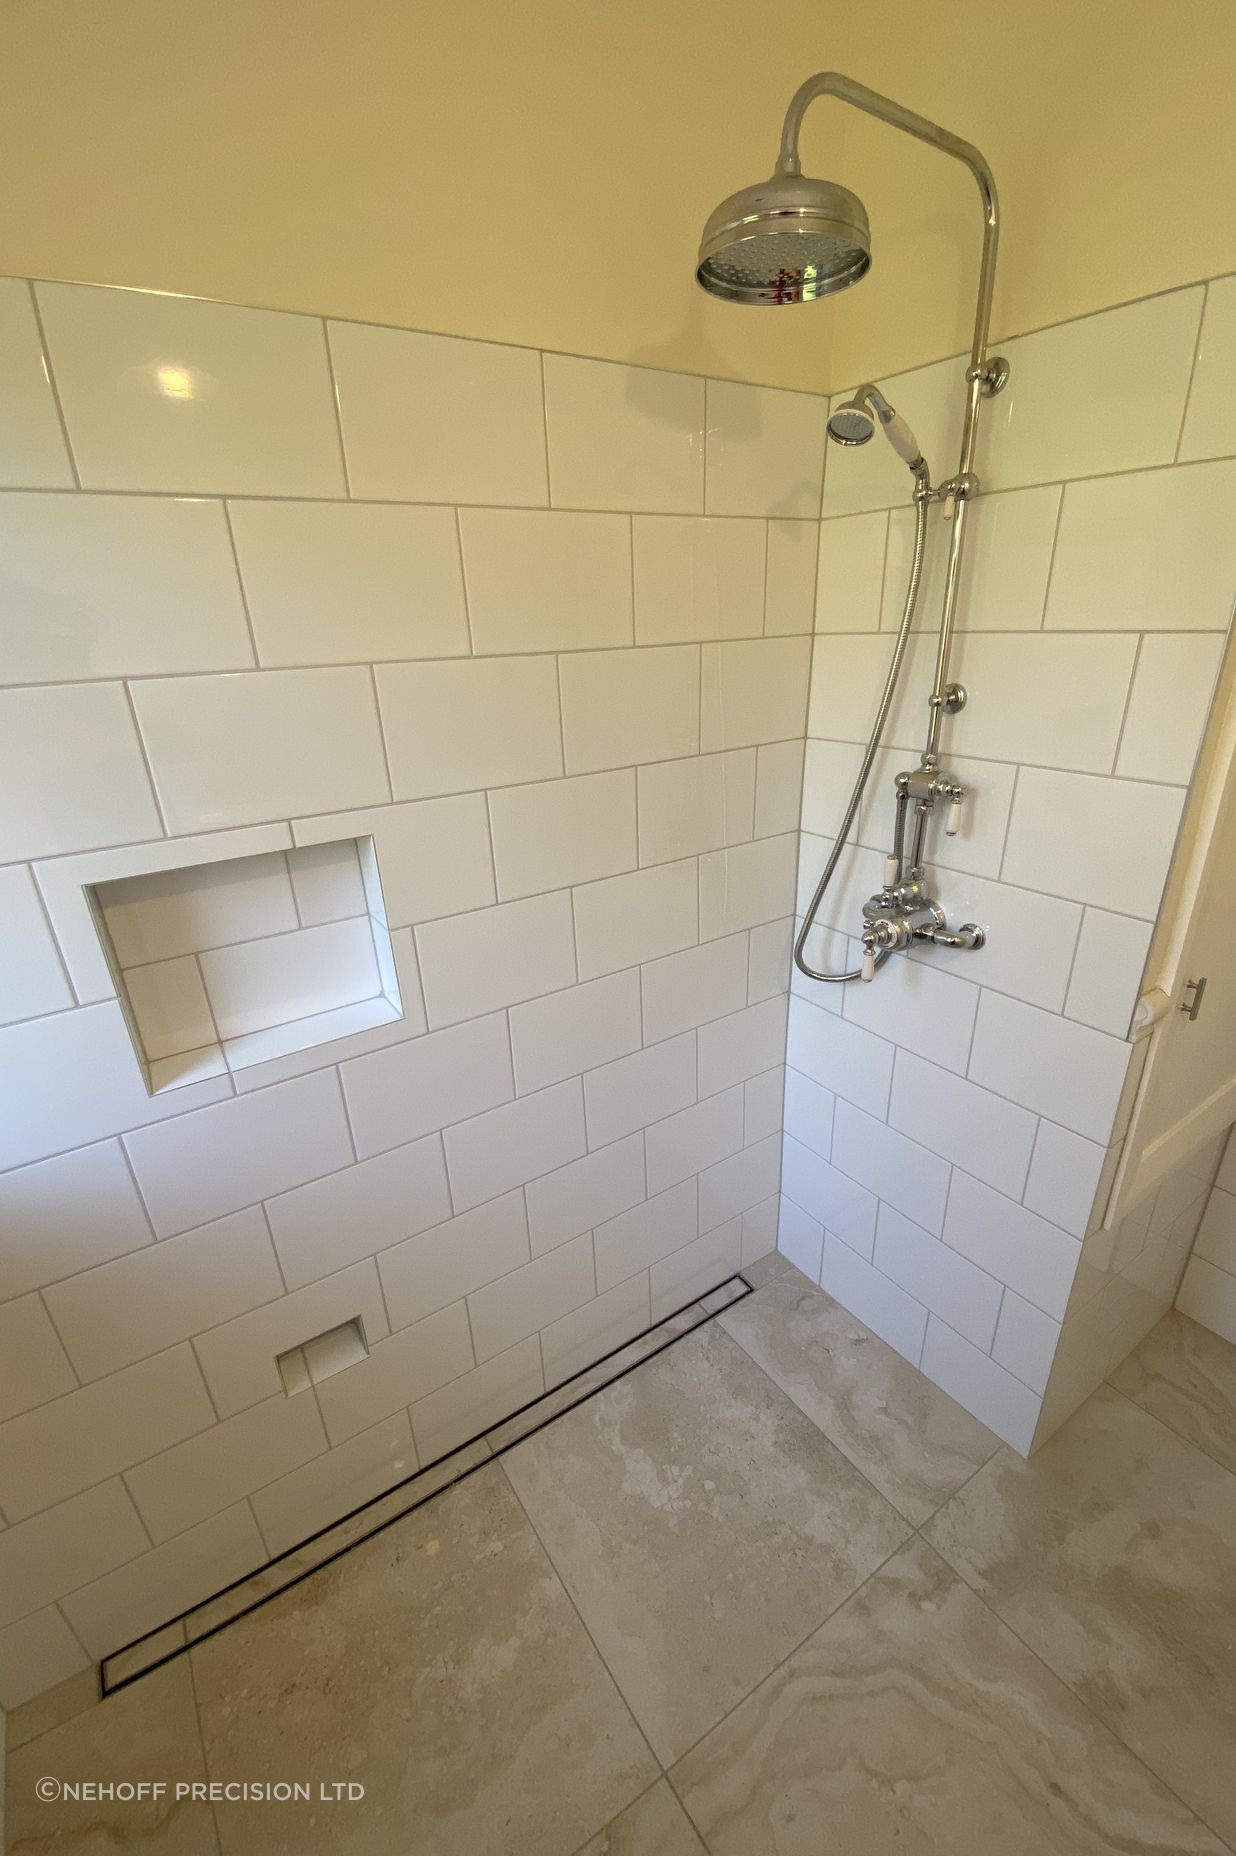 Tiled bathroom floor &amp; shower walls